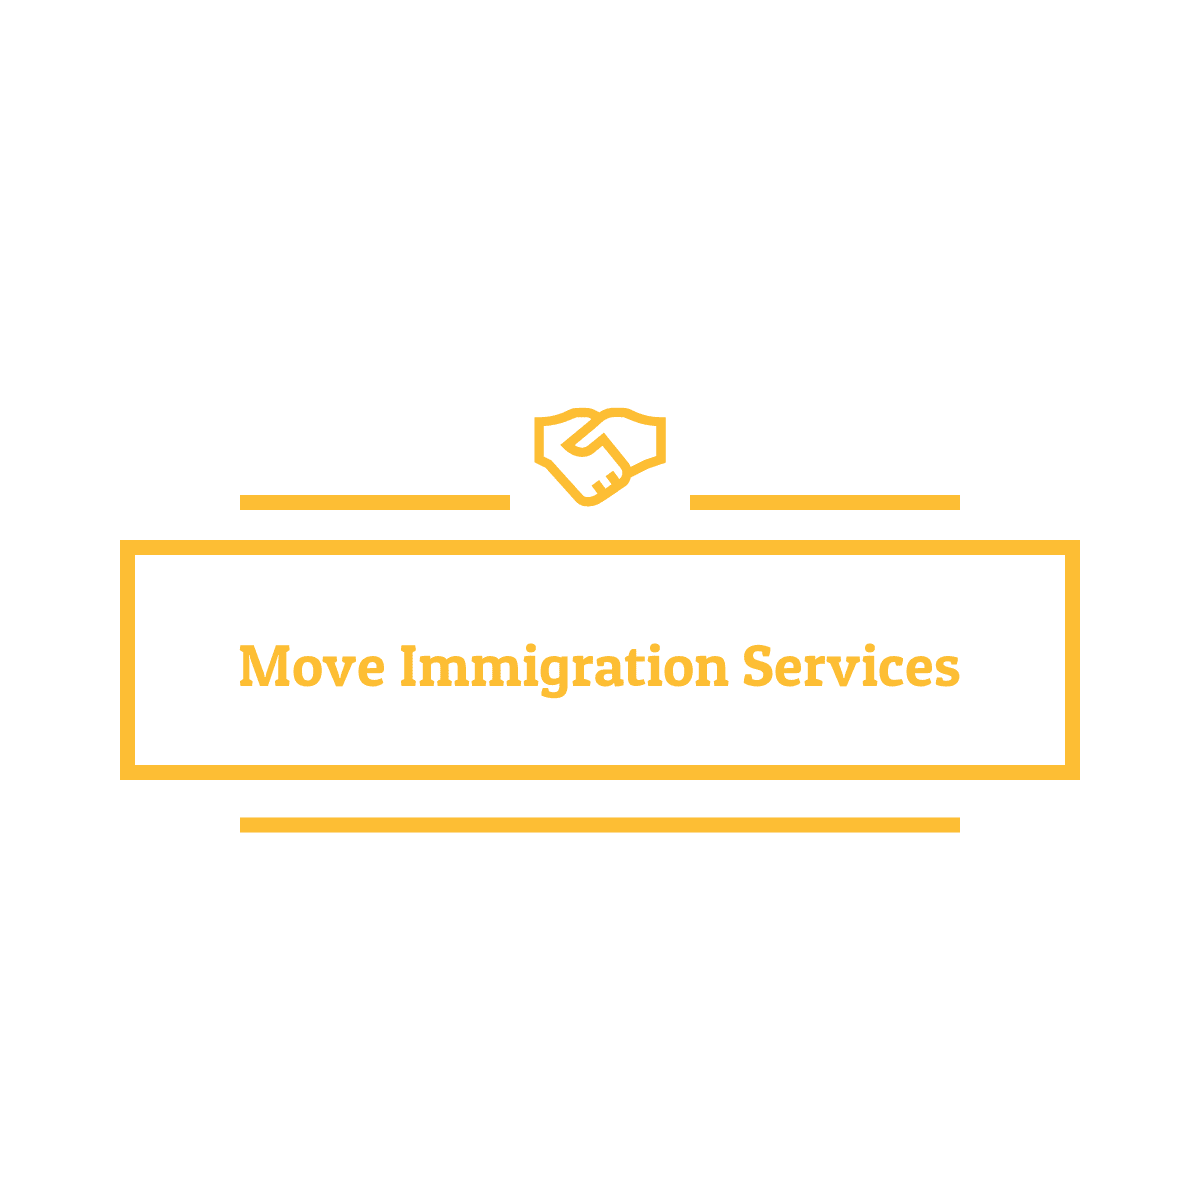 Move Immigration